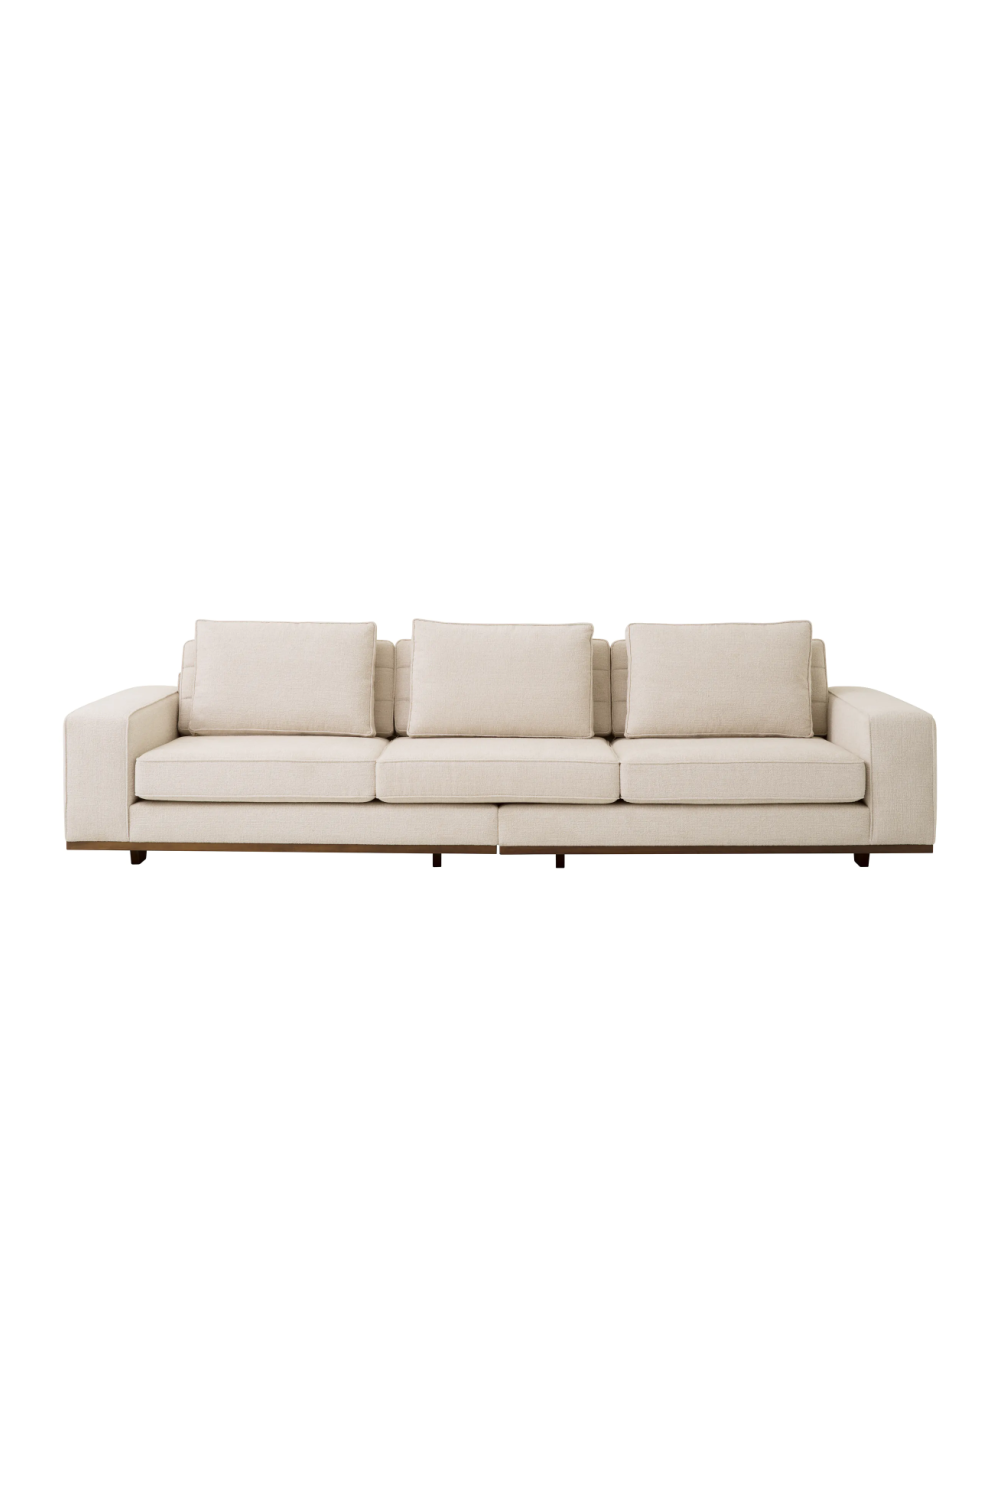 Beige Modern Sofa | Eichholtz Aurora | Oroa.com